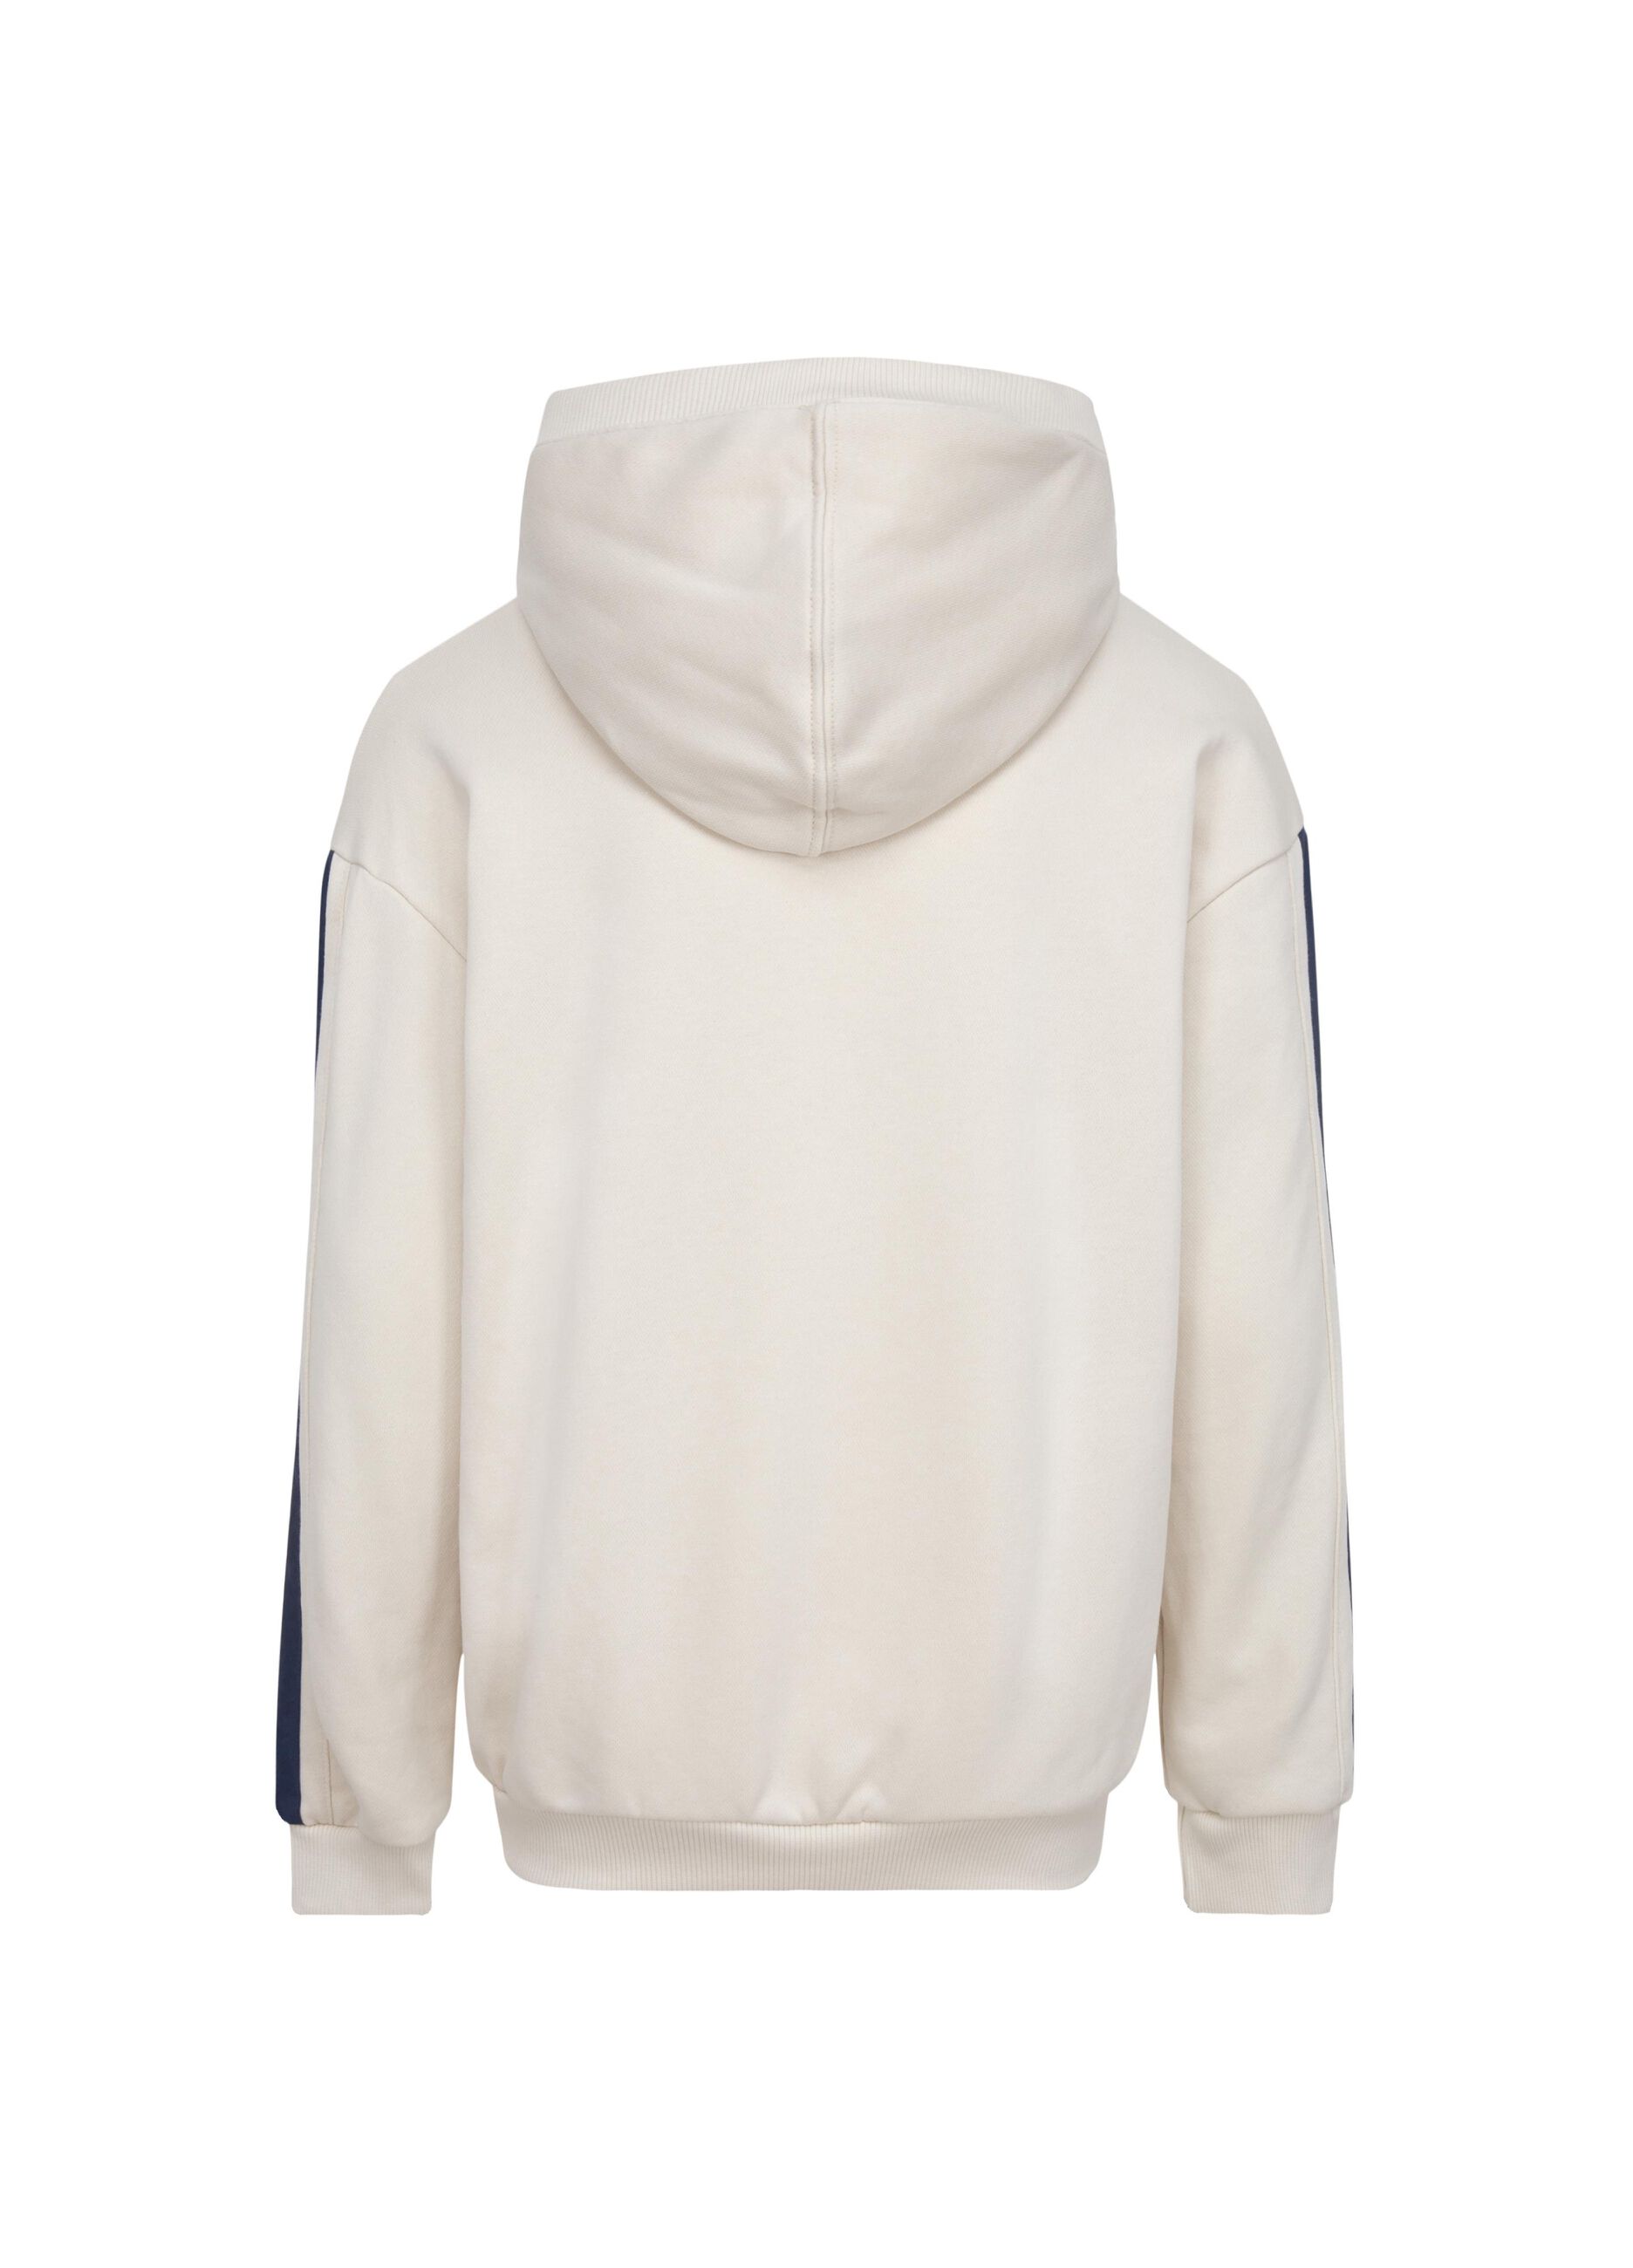 Sweatshirt with hood and Club logo print